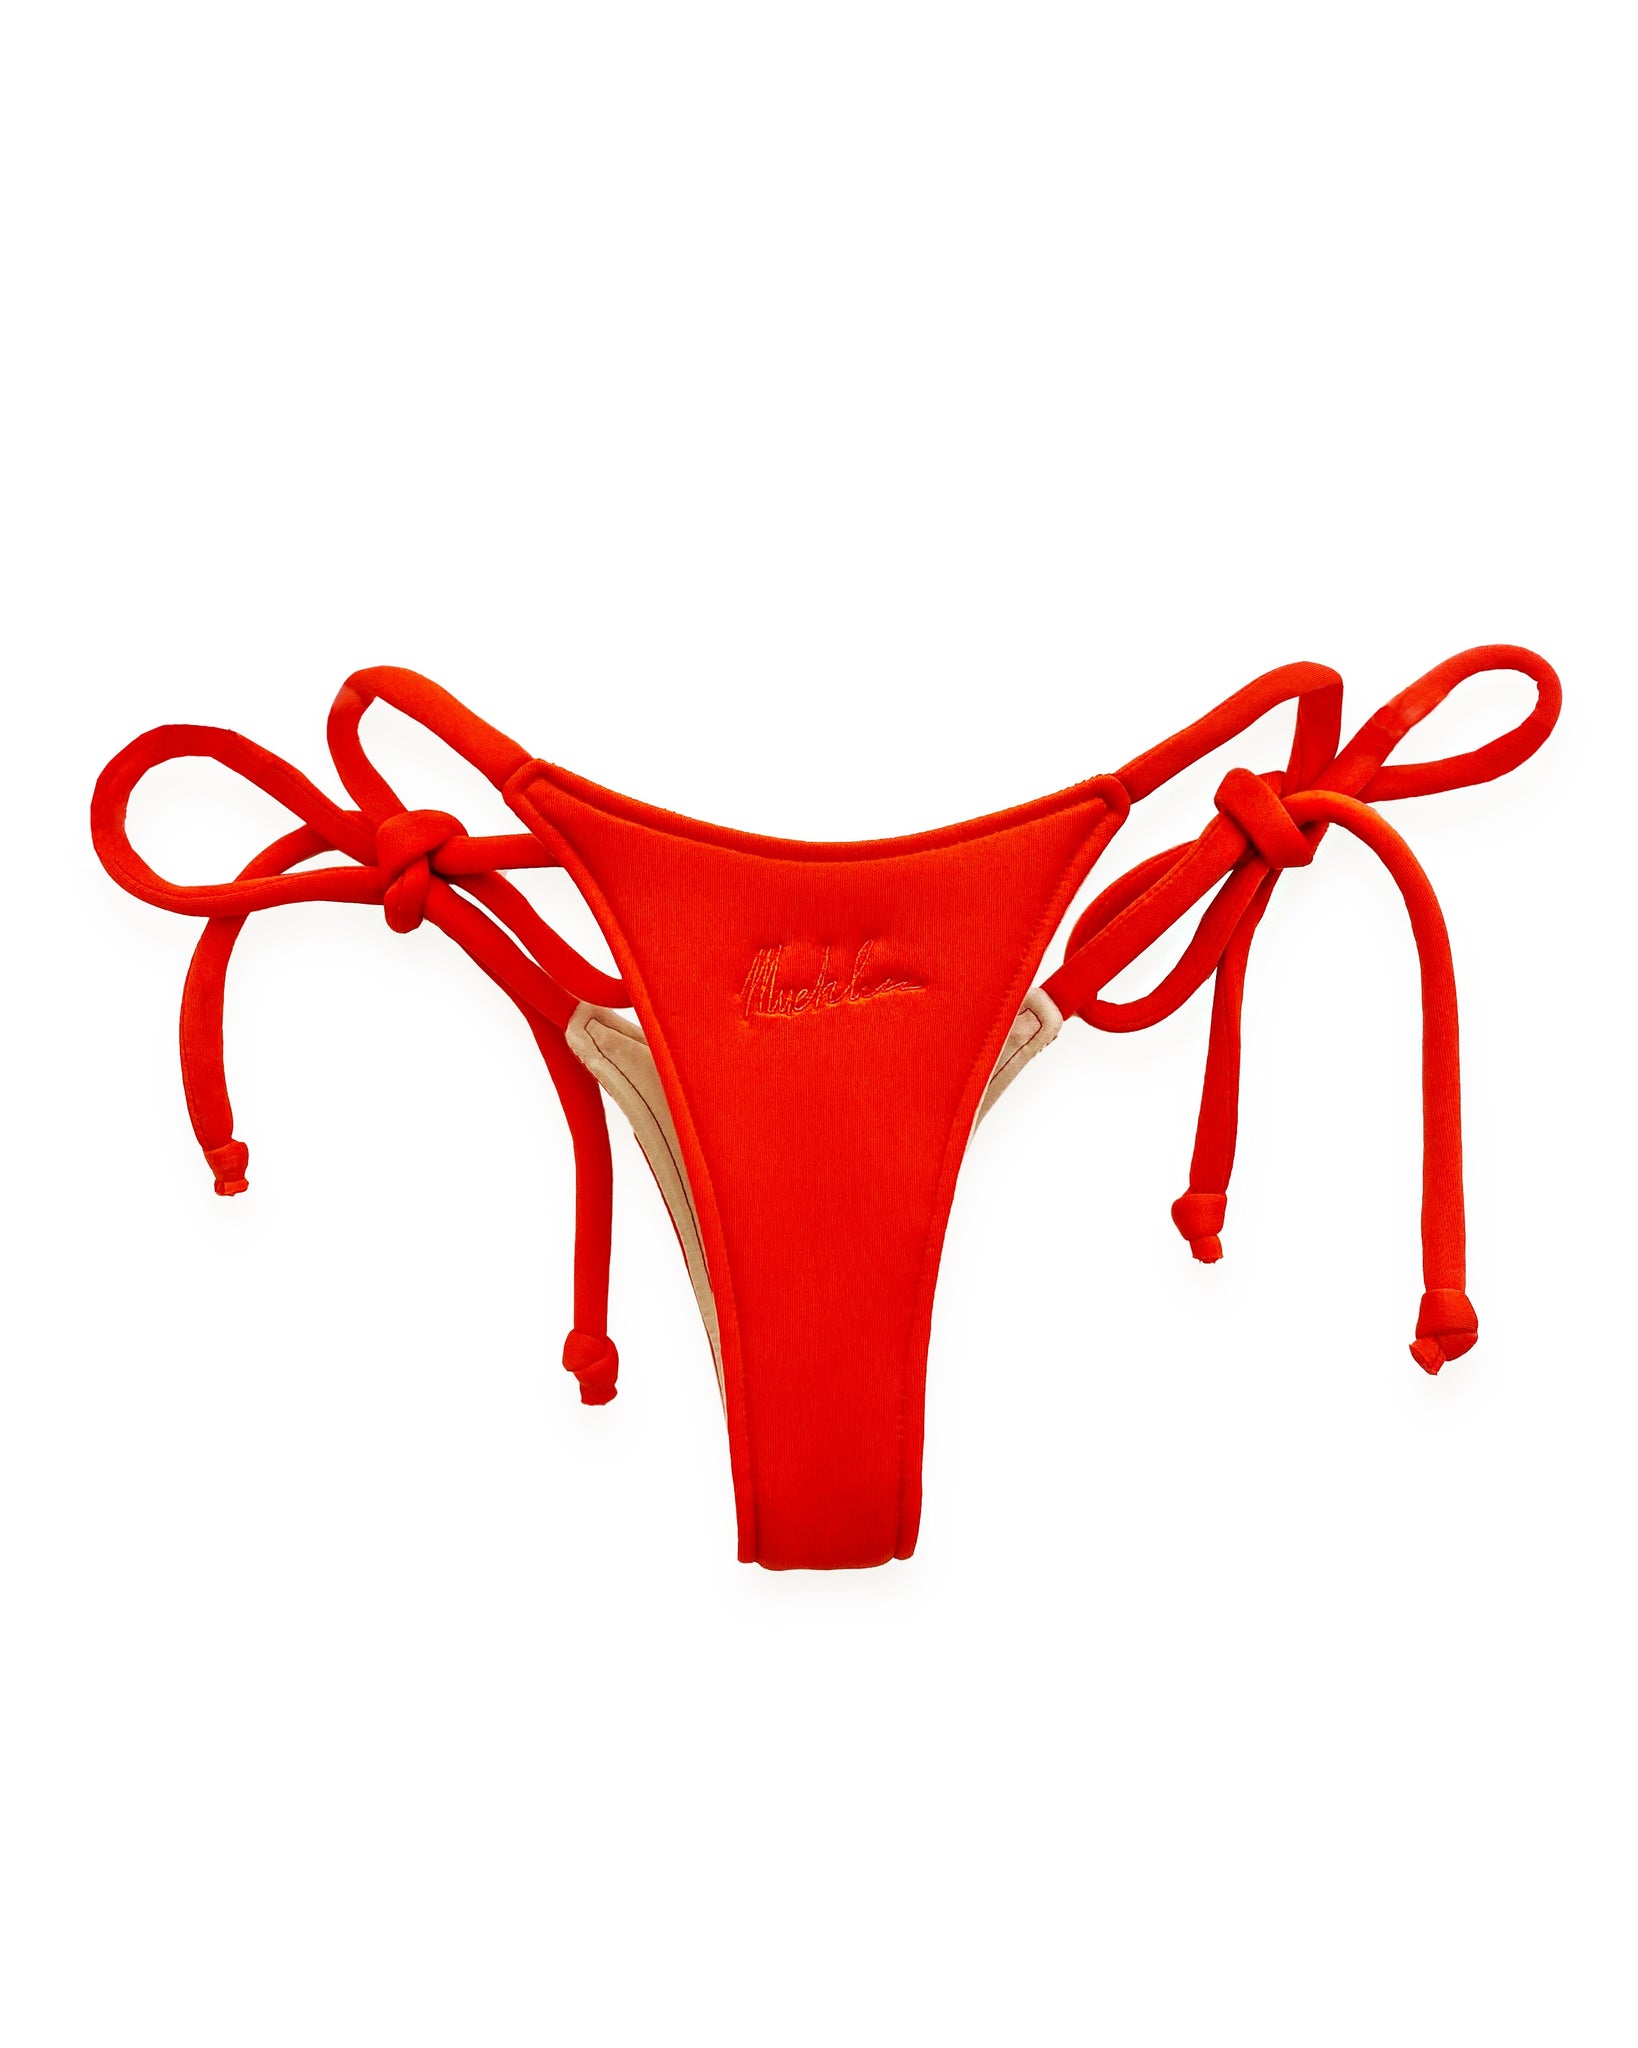 reverse view of red neoprene bikini with Muehleder signature detail